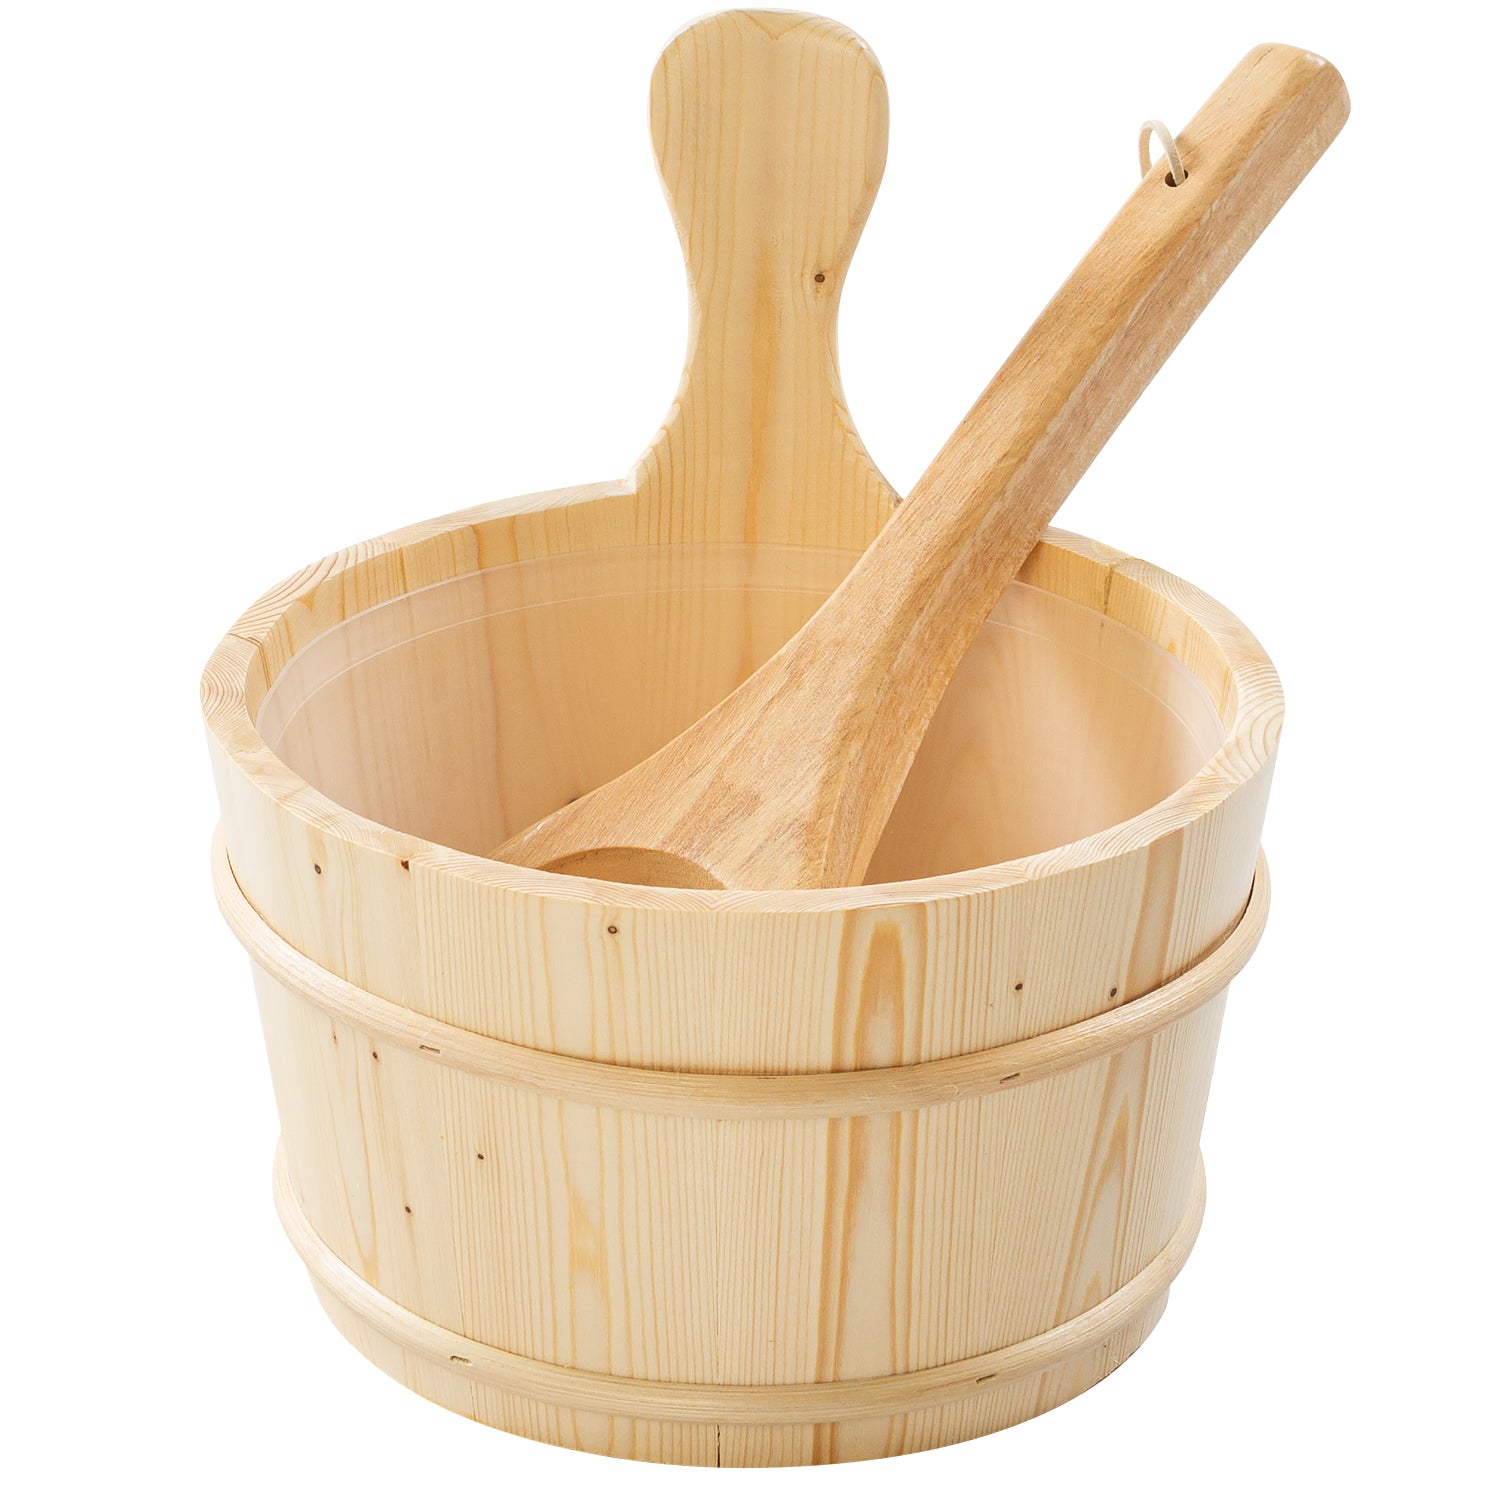 SET-A: 1 ladle w/handle + 1 large bucket